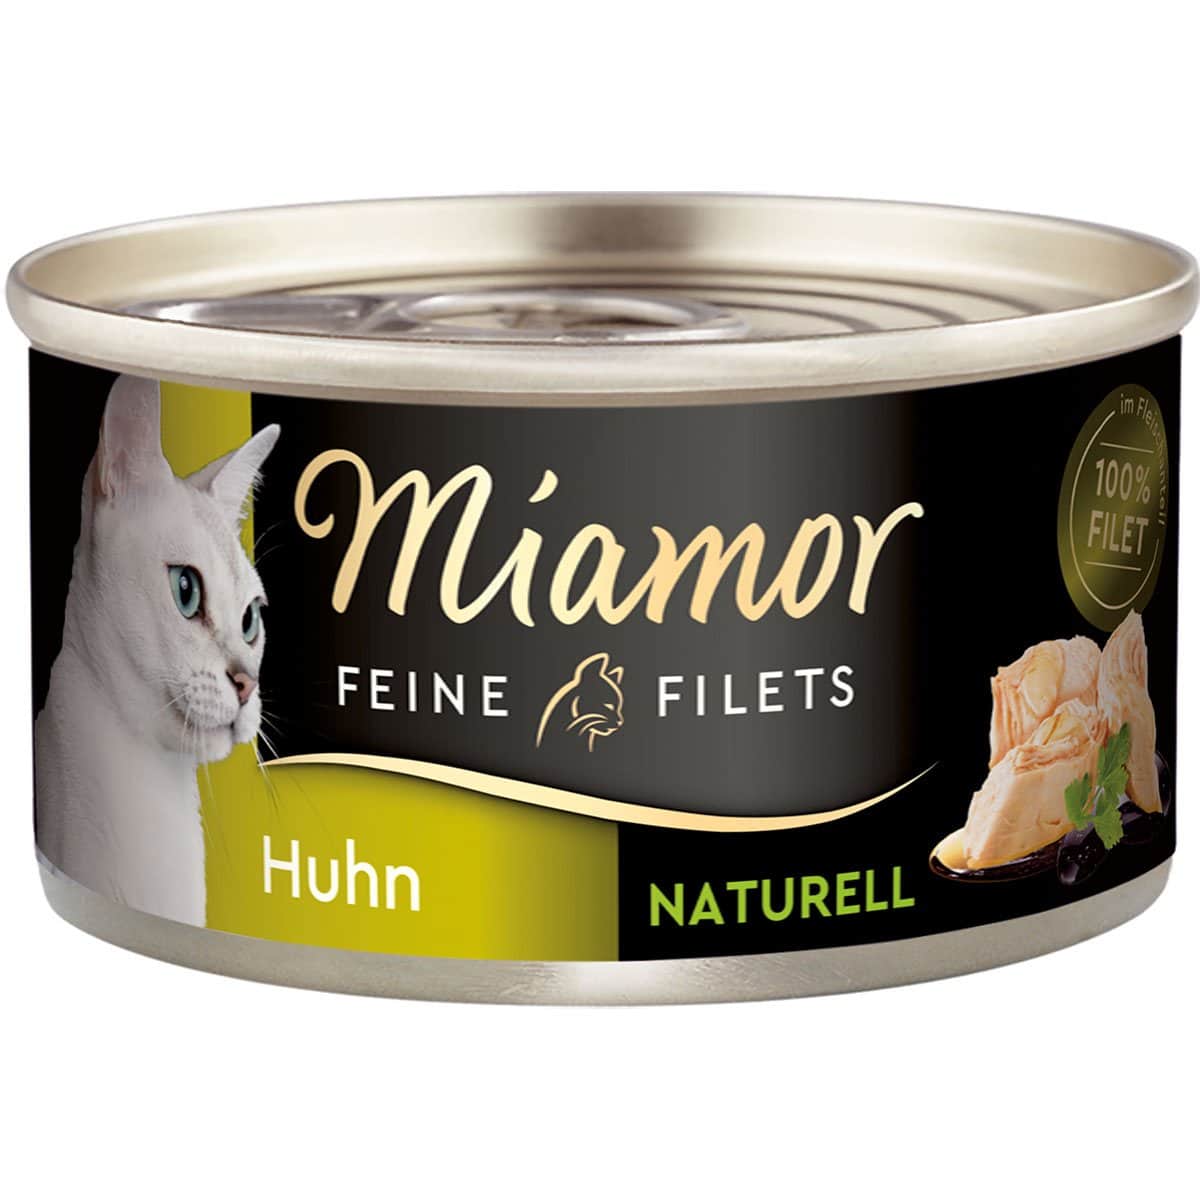 Miamor Feine Filets Naturelle Huhn Pur 80g Dose 48x80g